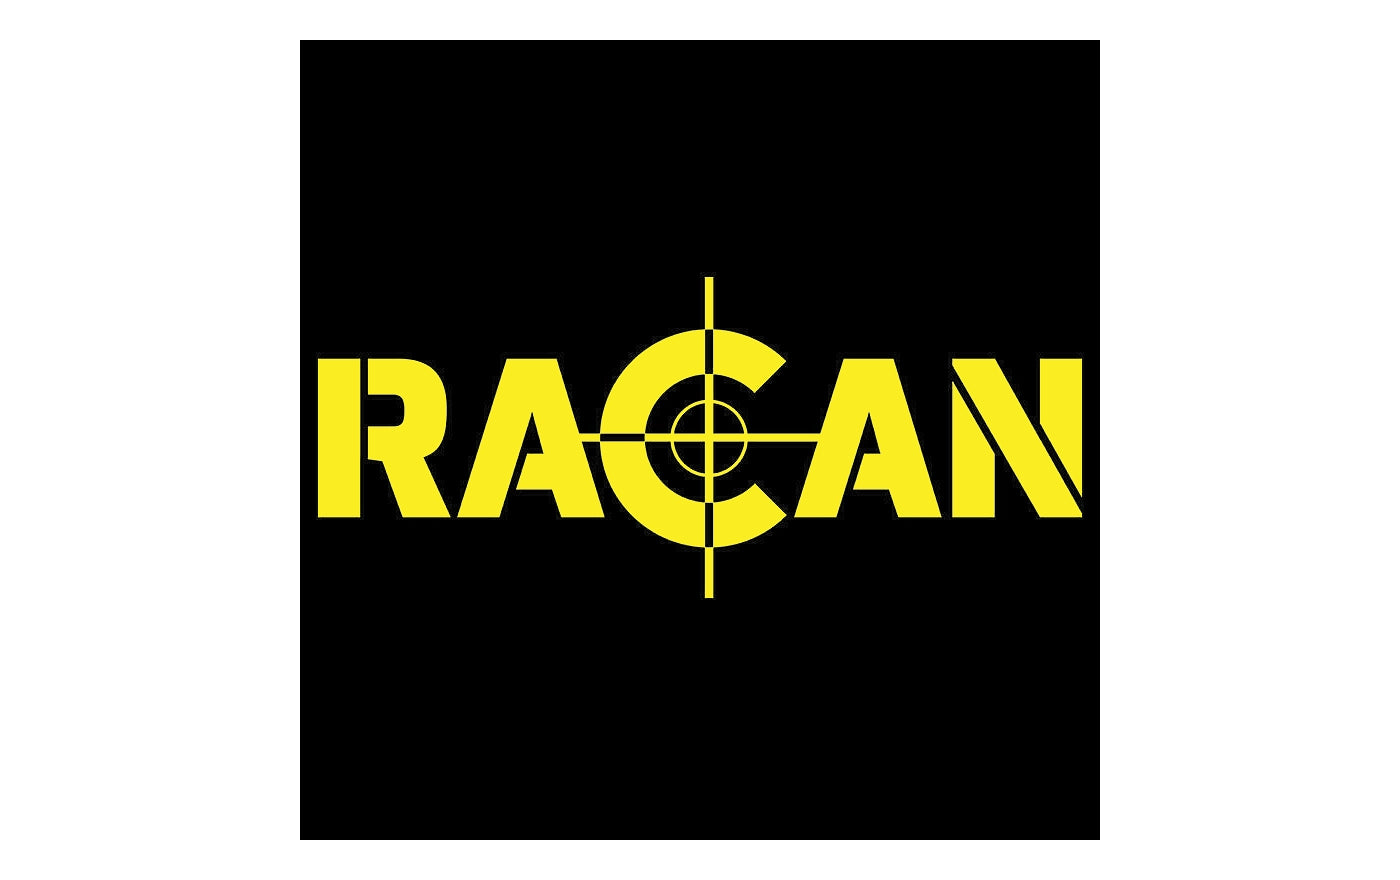 Racan - Mole Scissor Trap - Buy Online SPR Centre